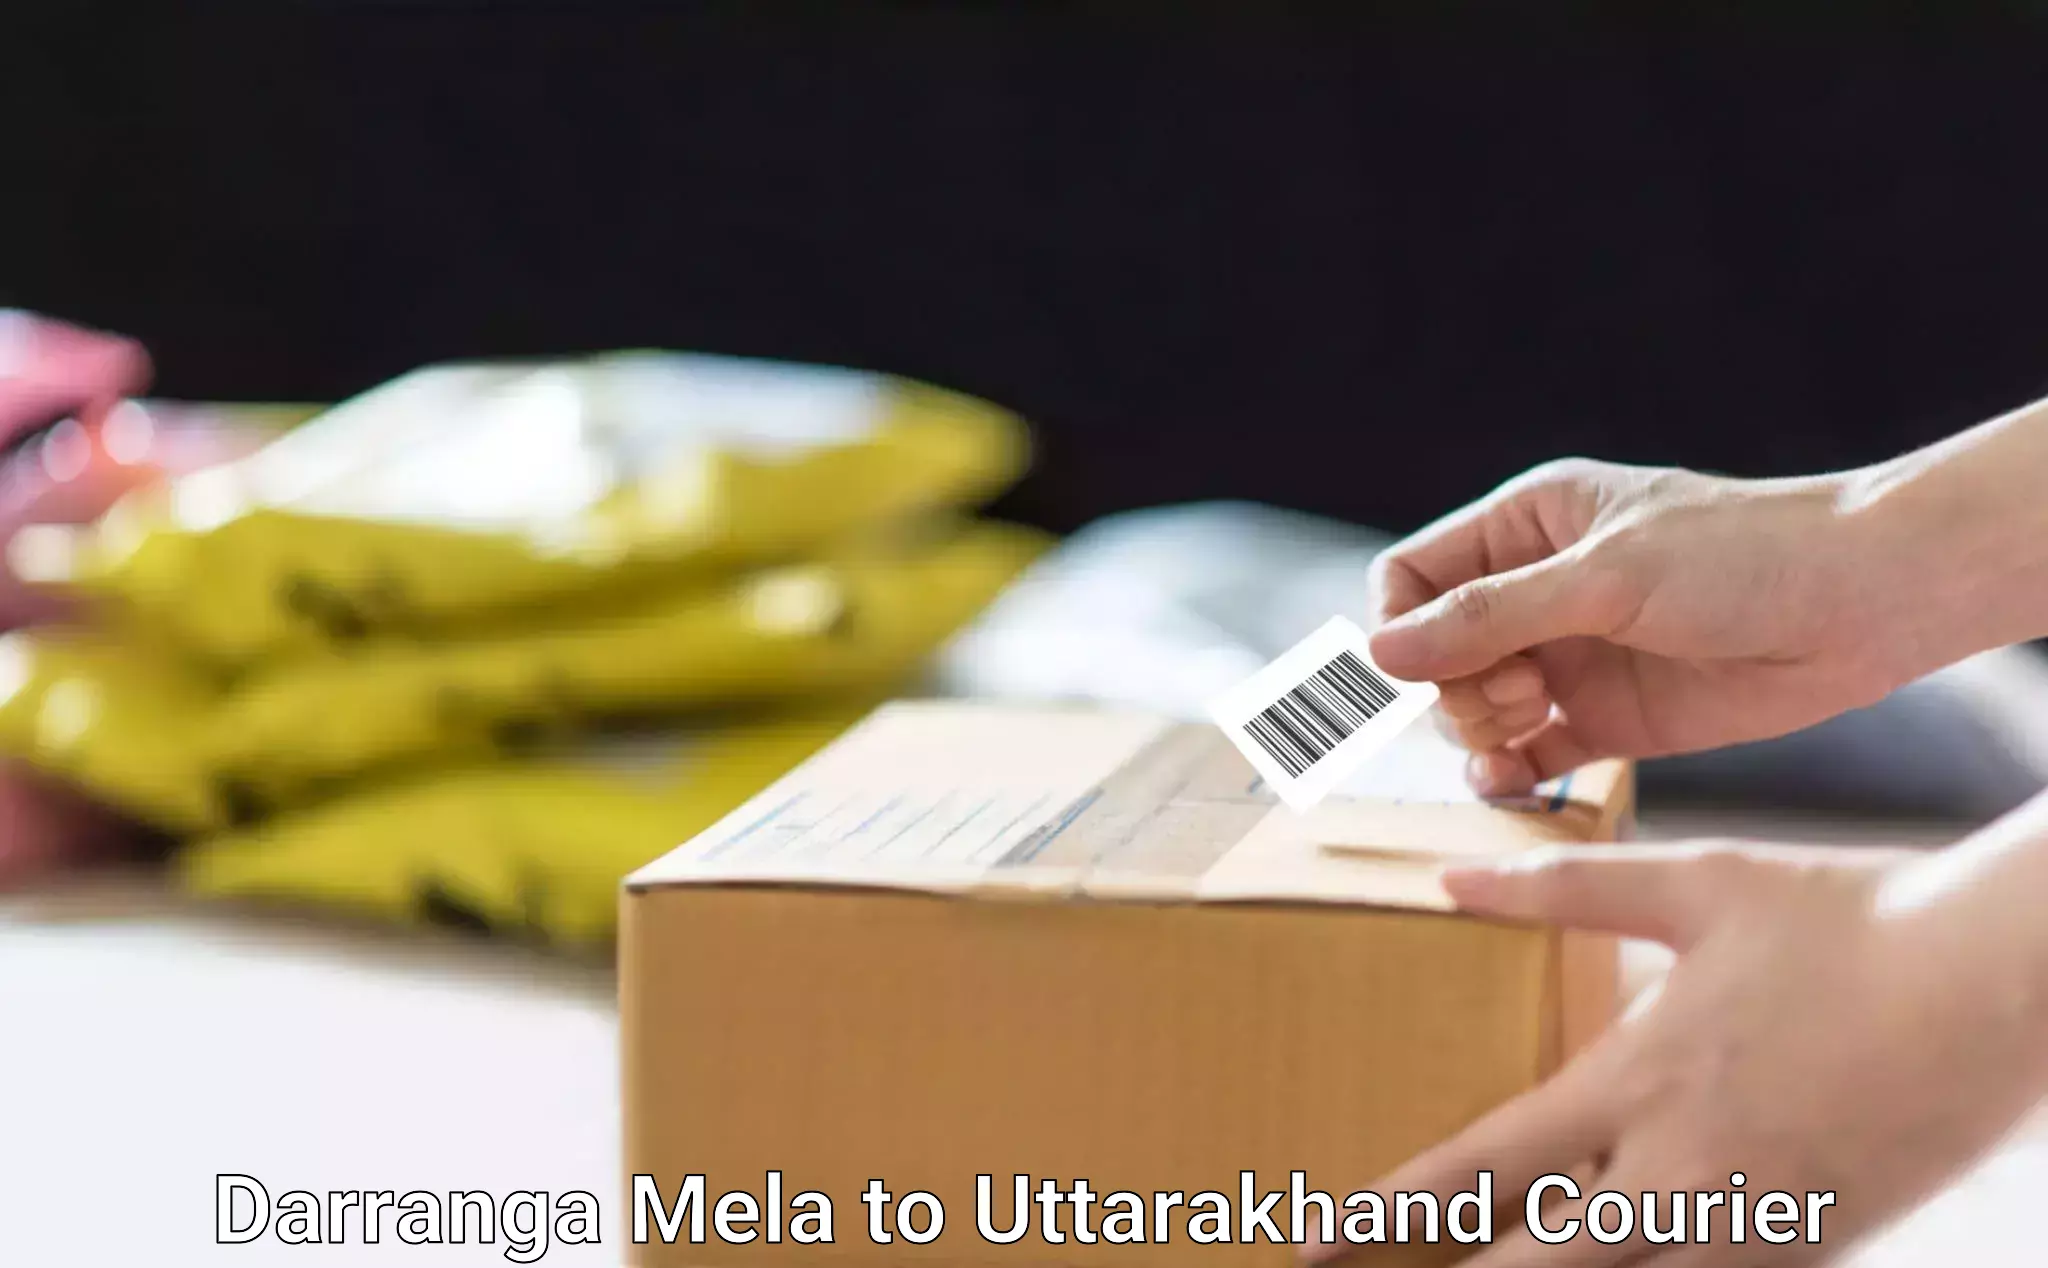 Modern courier technology Darranga Mela to Rishikesh